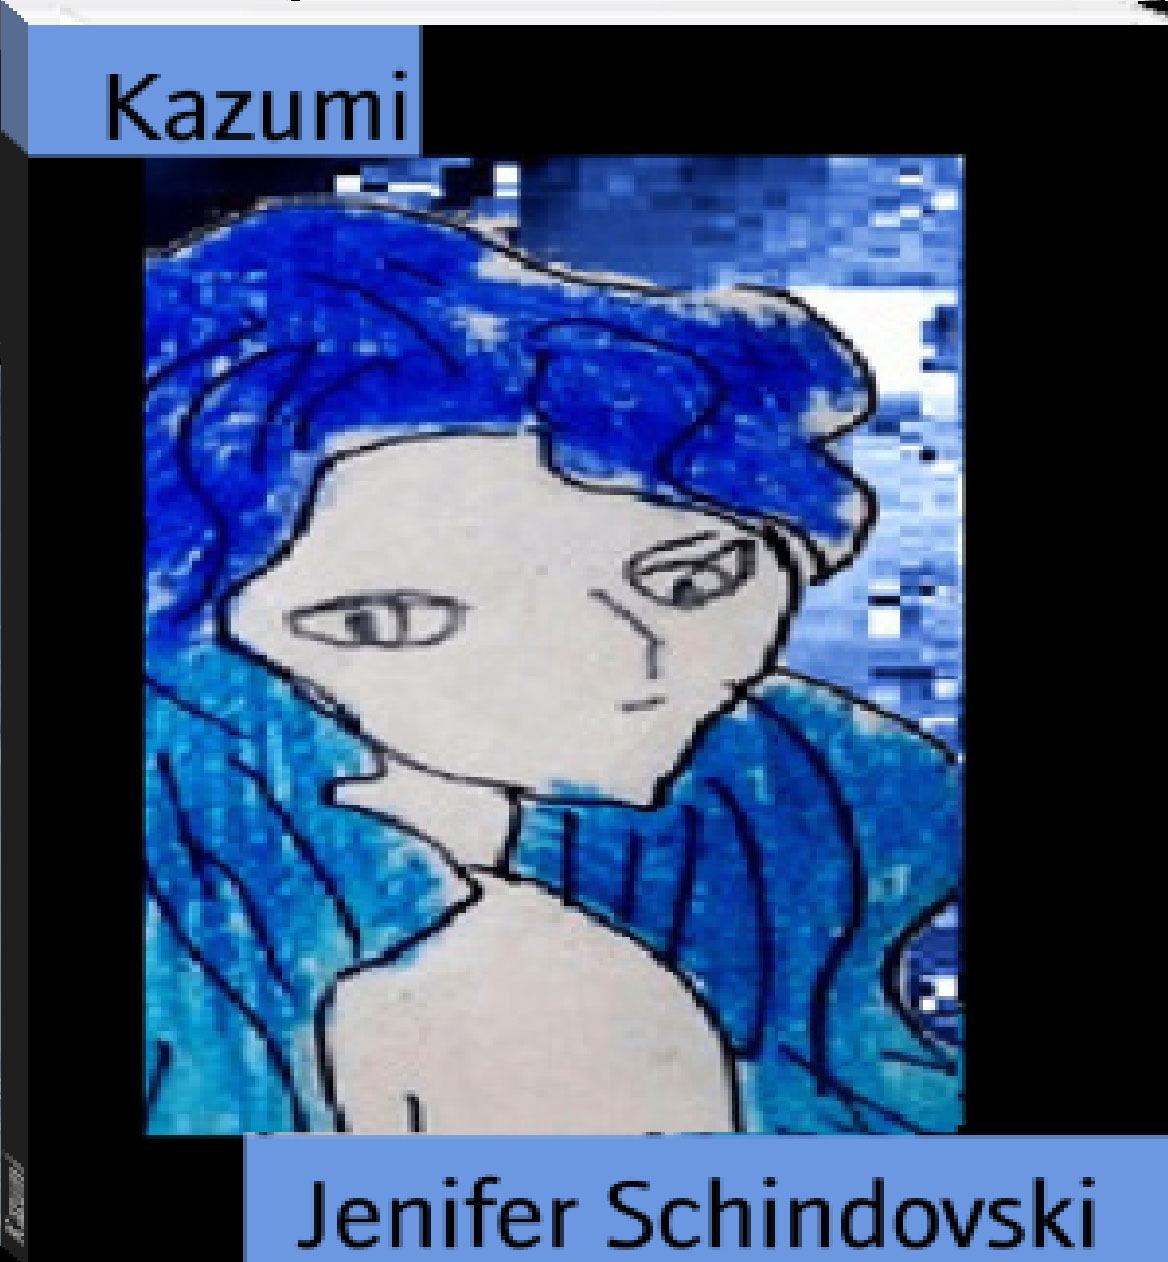 Kazumi rendition image